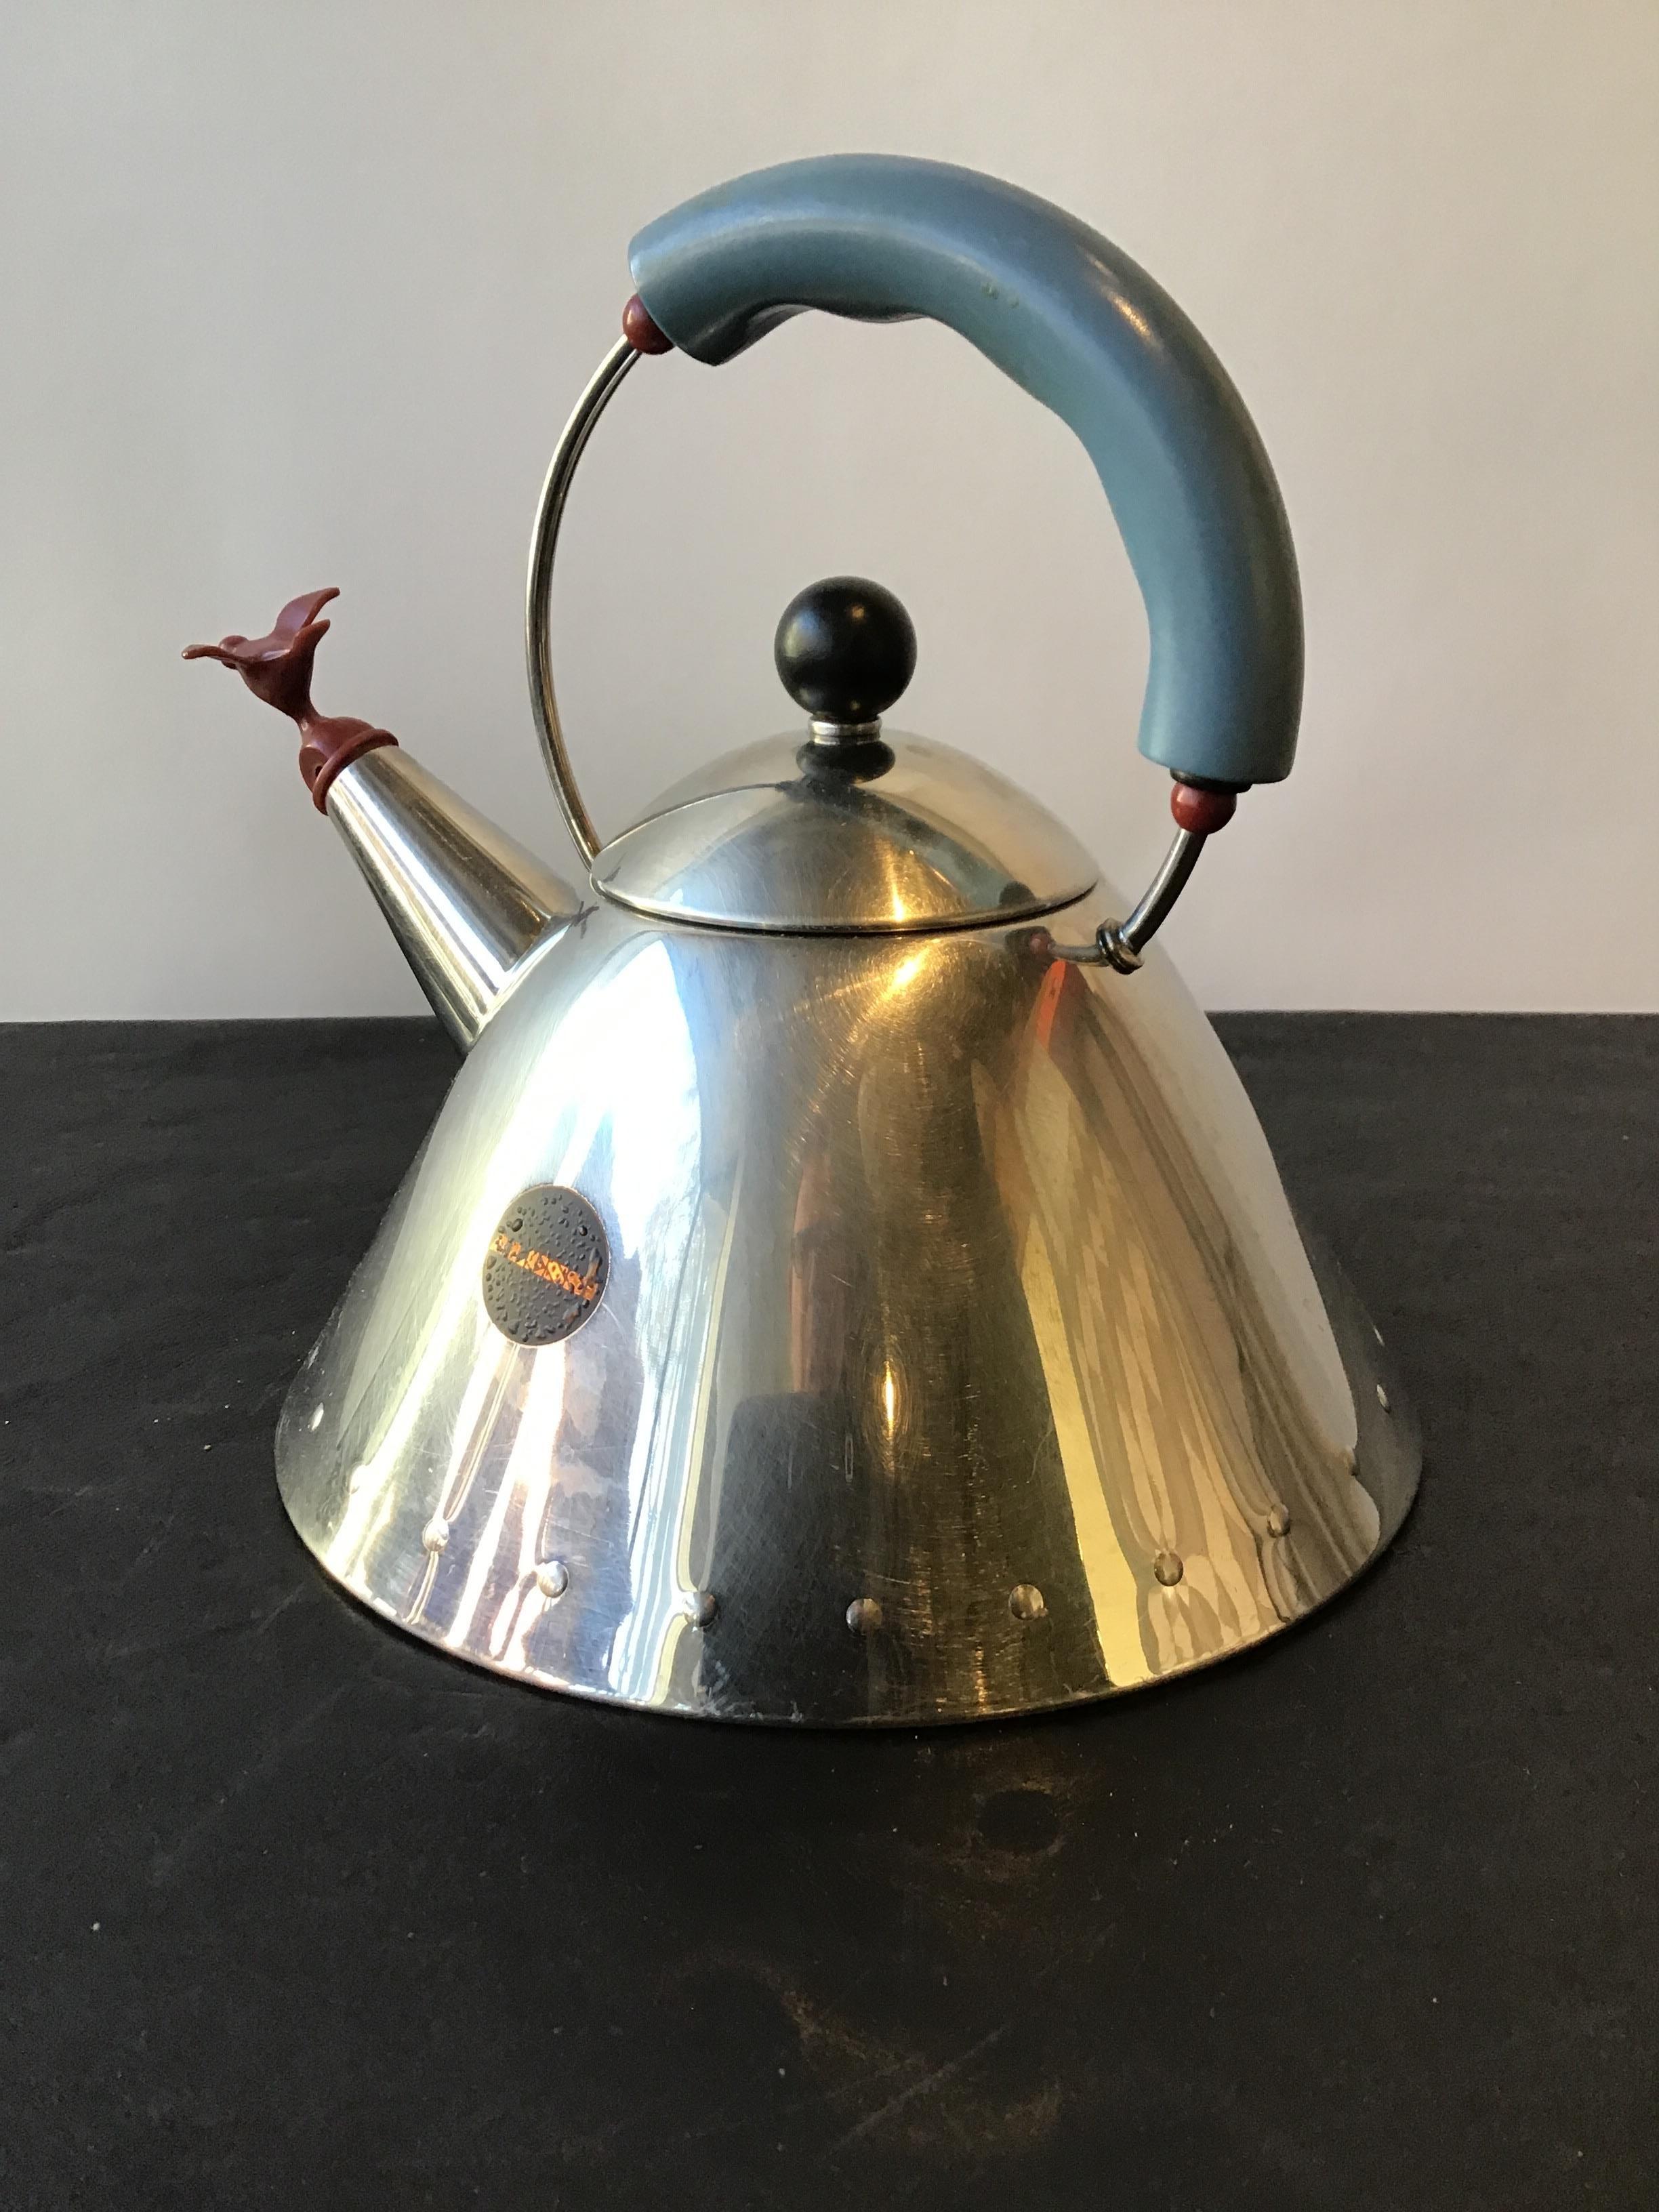 Alessi 9093 Michael Graves tea kettle.